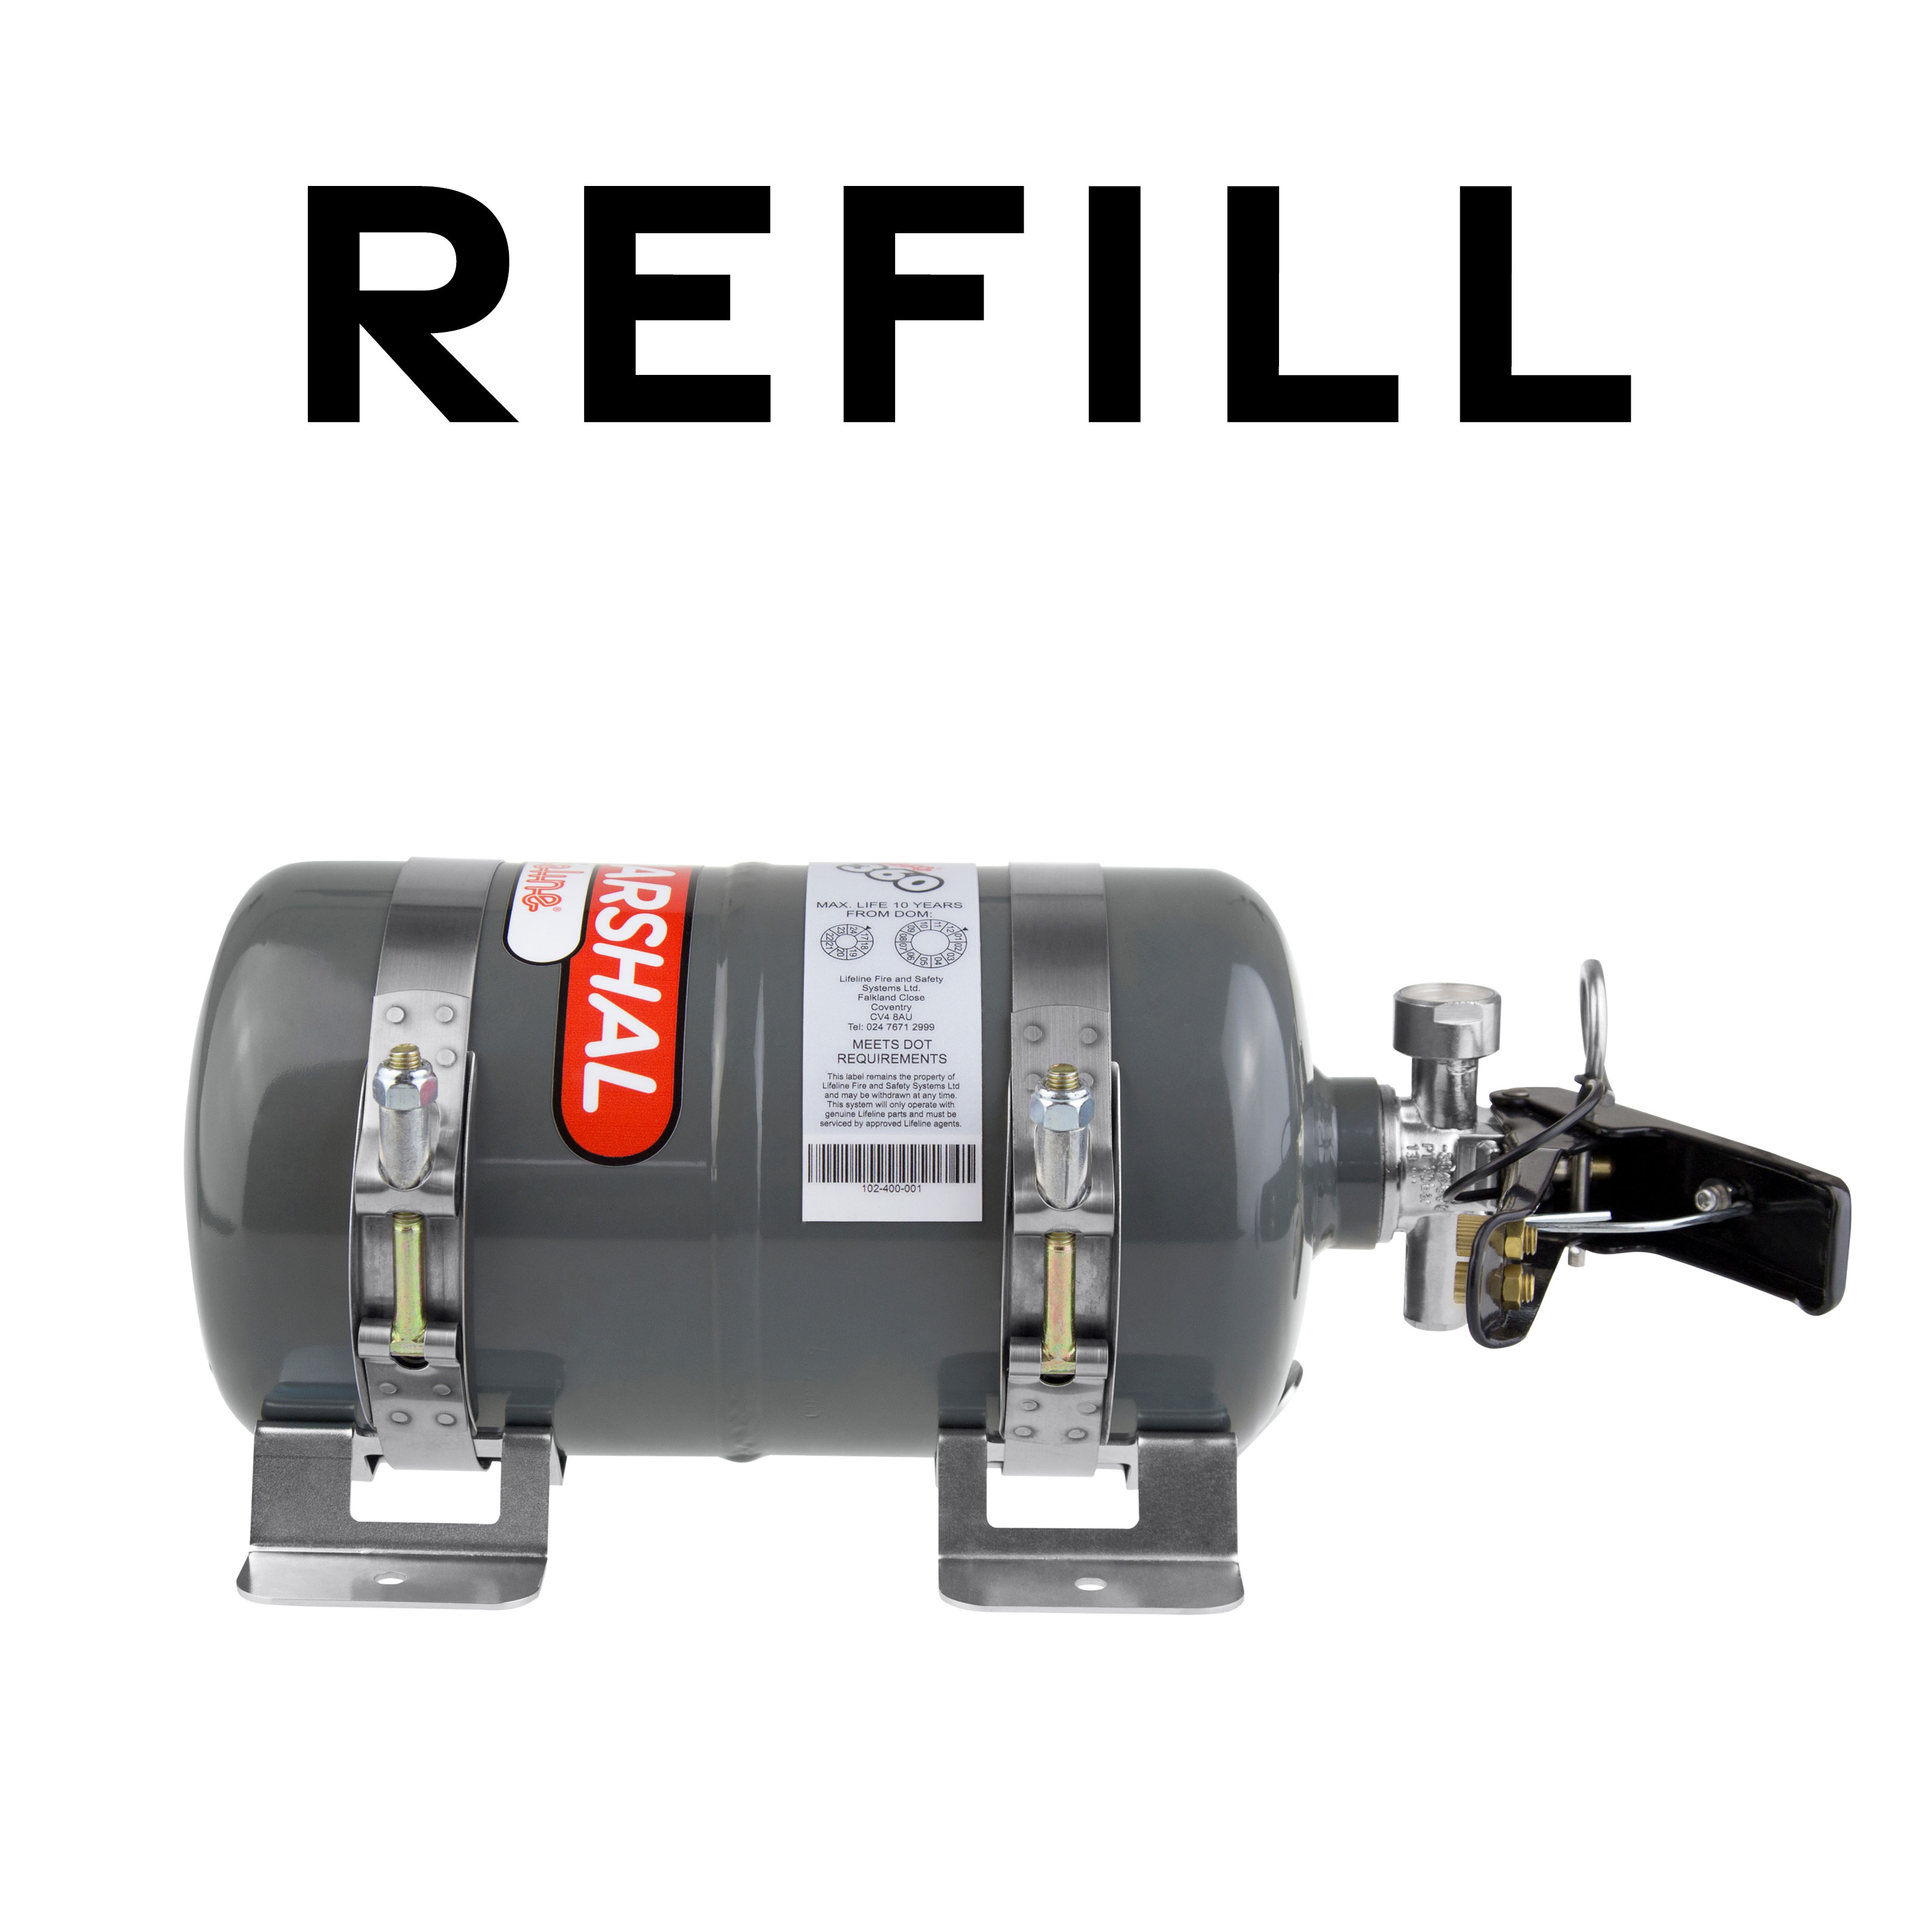 Refill - Lifeline Zero 360 FIA Novec 1230 Fire Marshal 3.0KG Mechanical Fire Extinguisher 